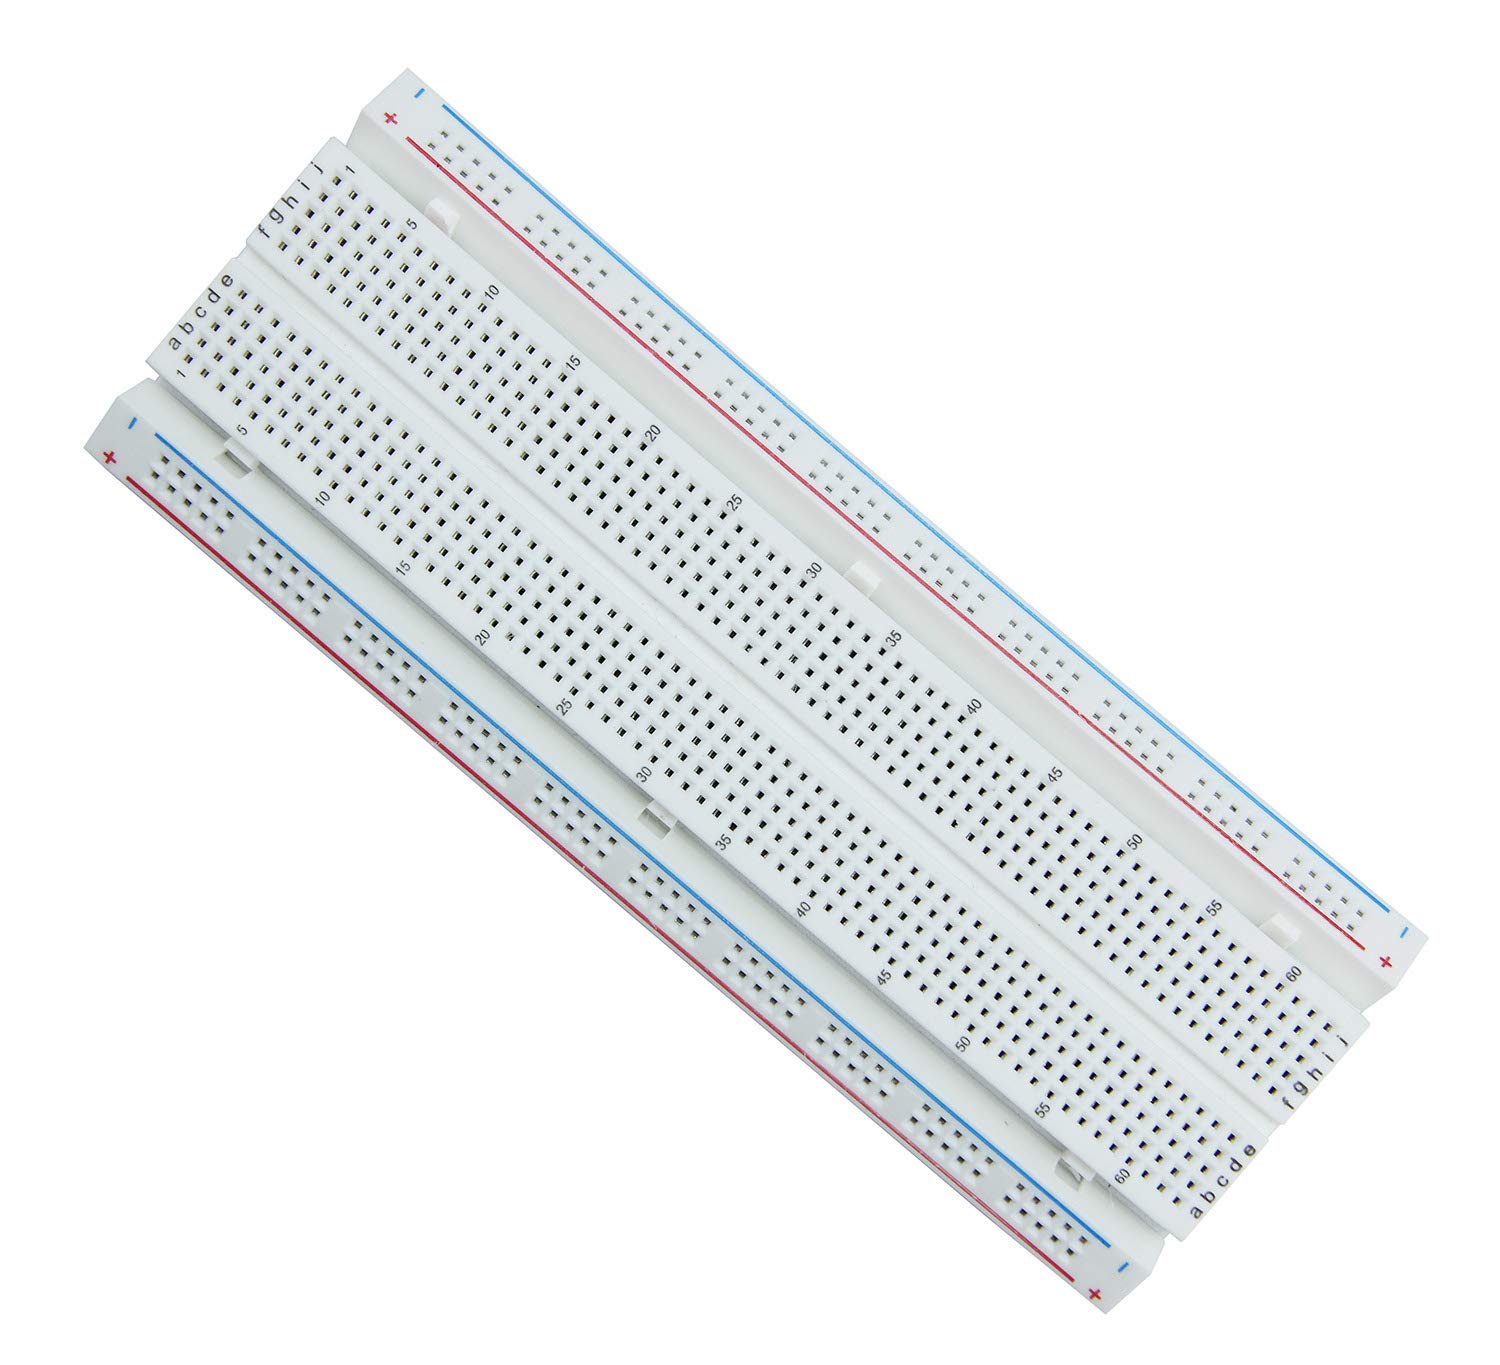 Mcigicm 10 stk breadboard 830 punkt loddefri prototype printkort kit protoboard mb -102 til gør-det-selv elektronik kit